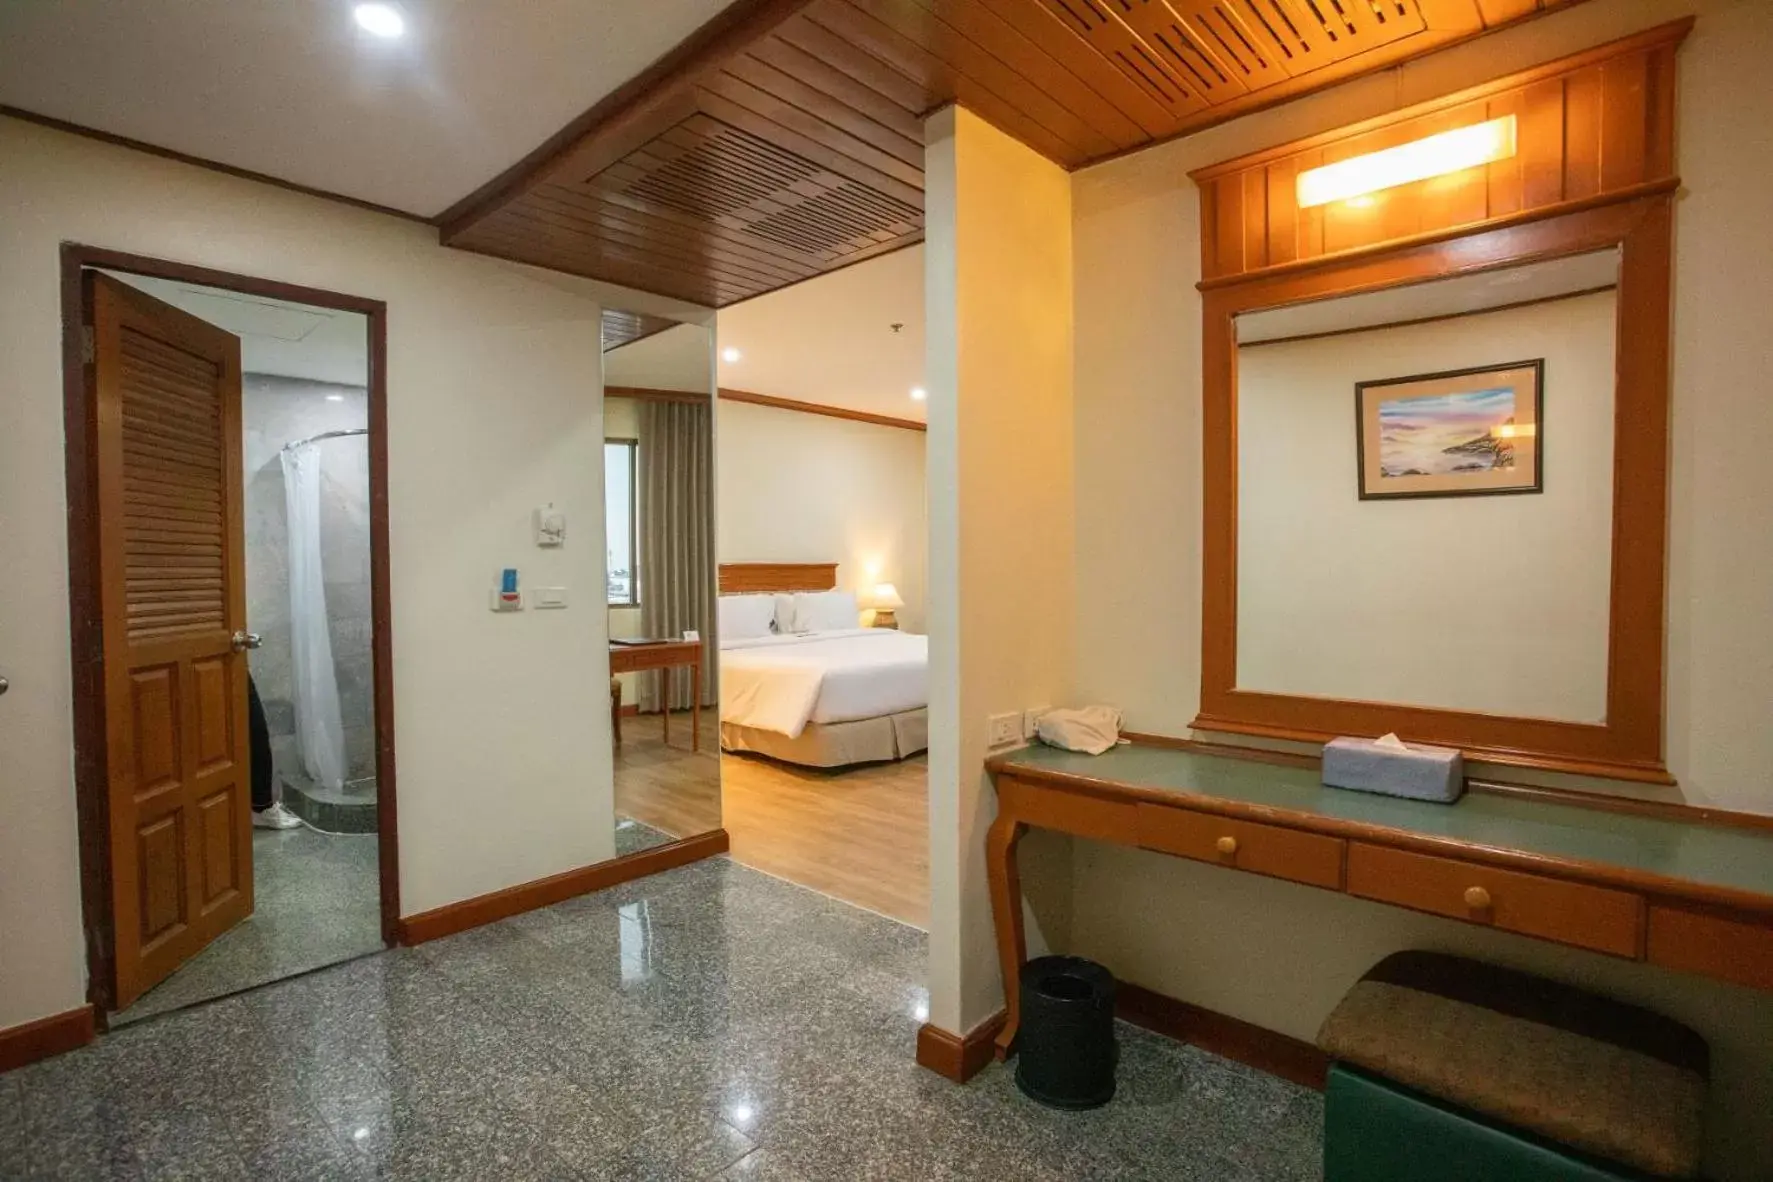 Bedroom, Bathroom in Star Convention Hotel (Star Hotel)